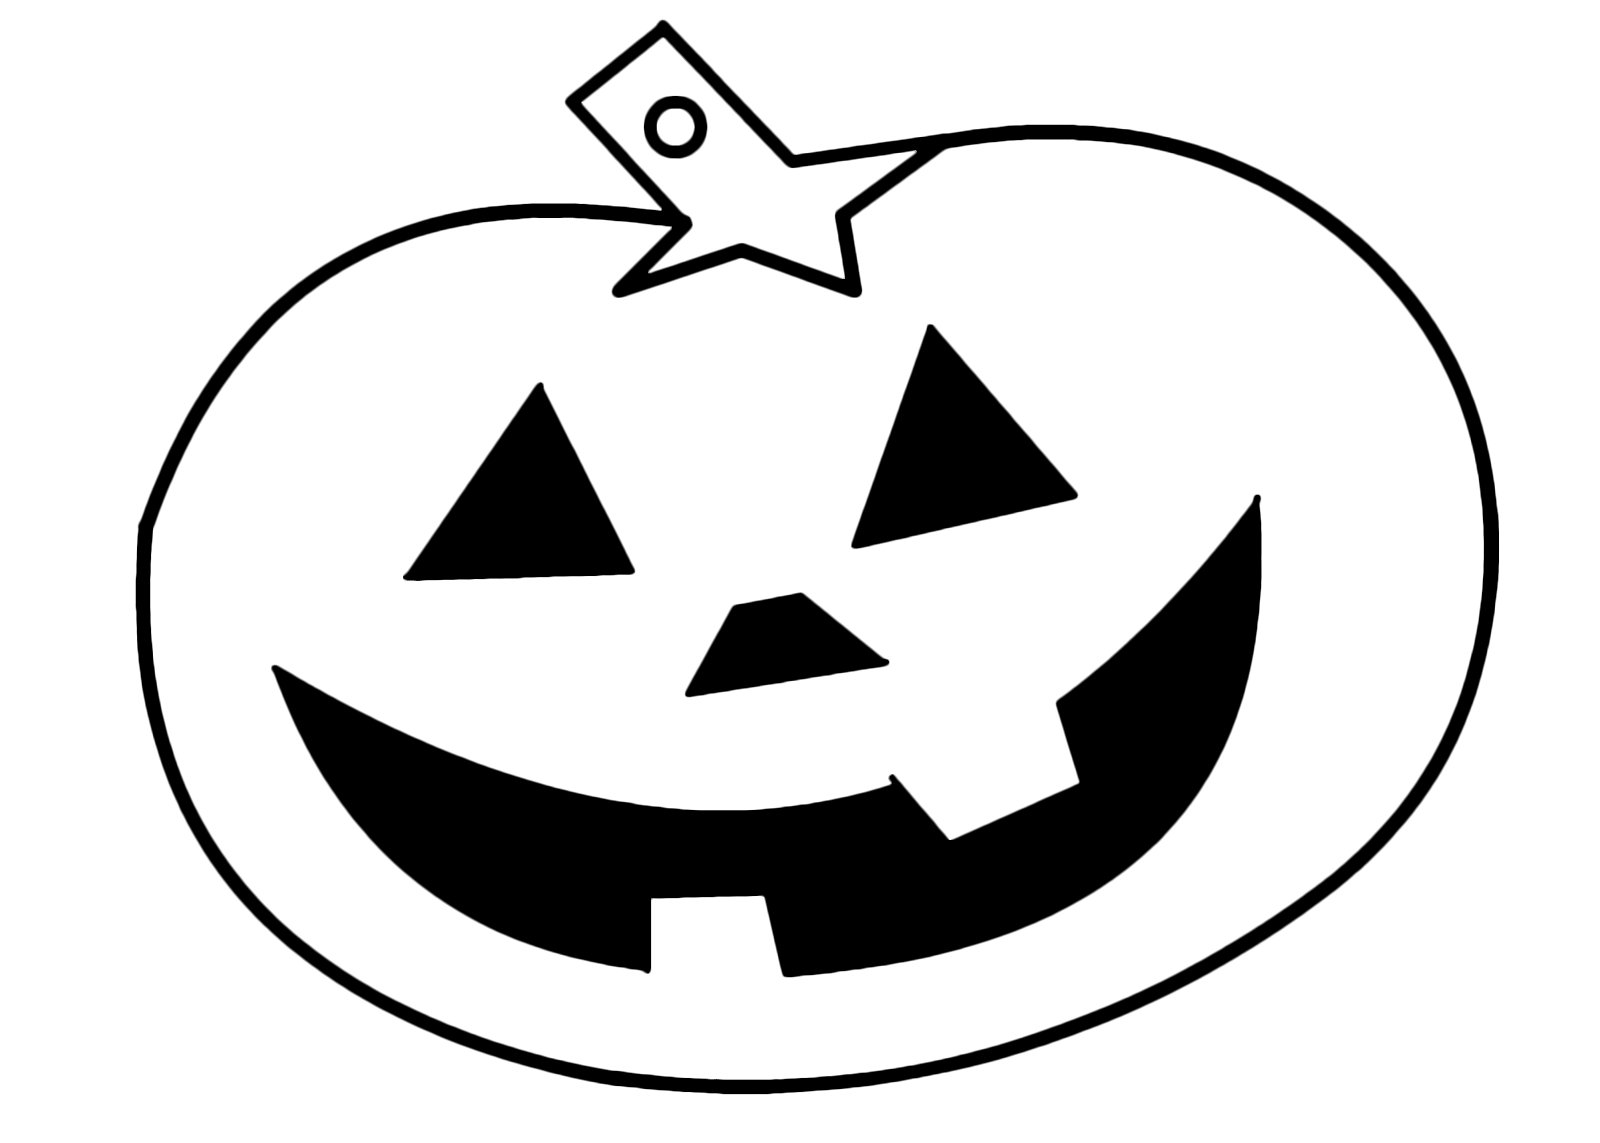 Halloween - A Halloween pumpkin to be colored